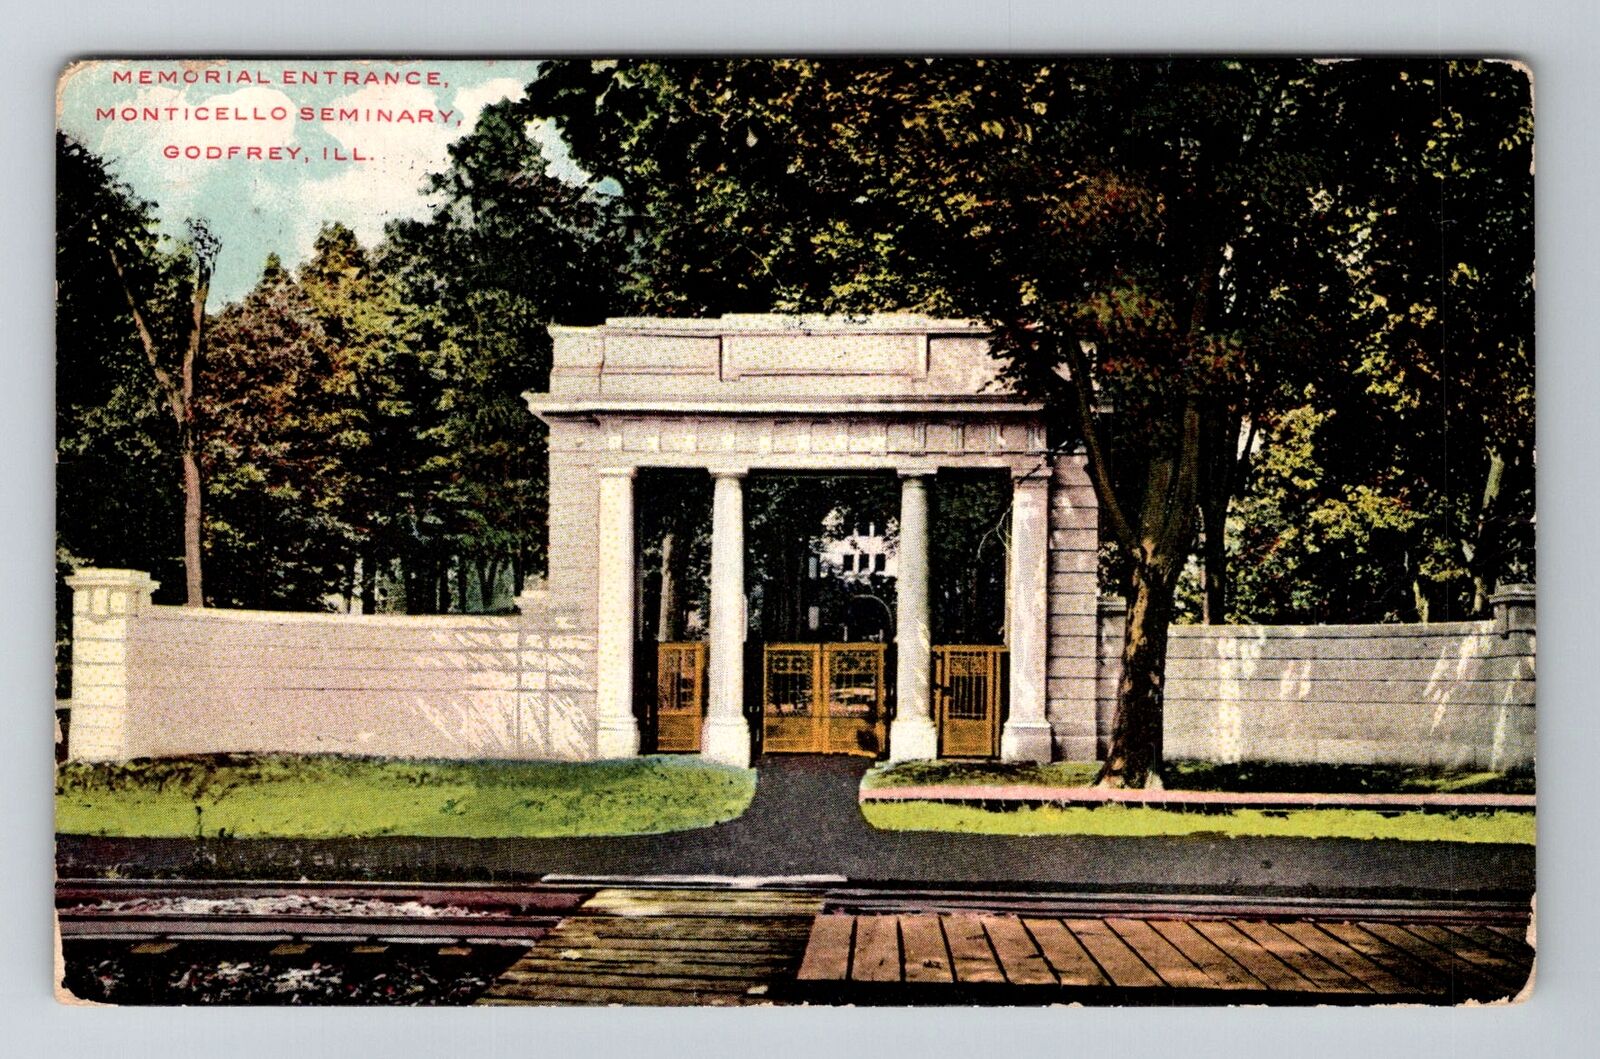 Godfrey, IL-Illinois, Monticello Seminary Entrance c1908, Vintage Postcard